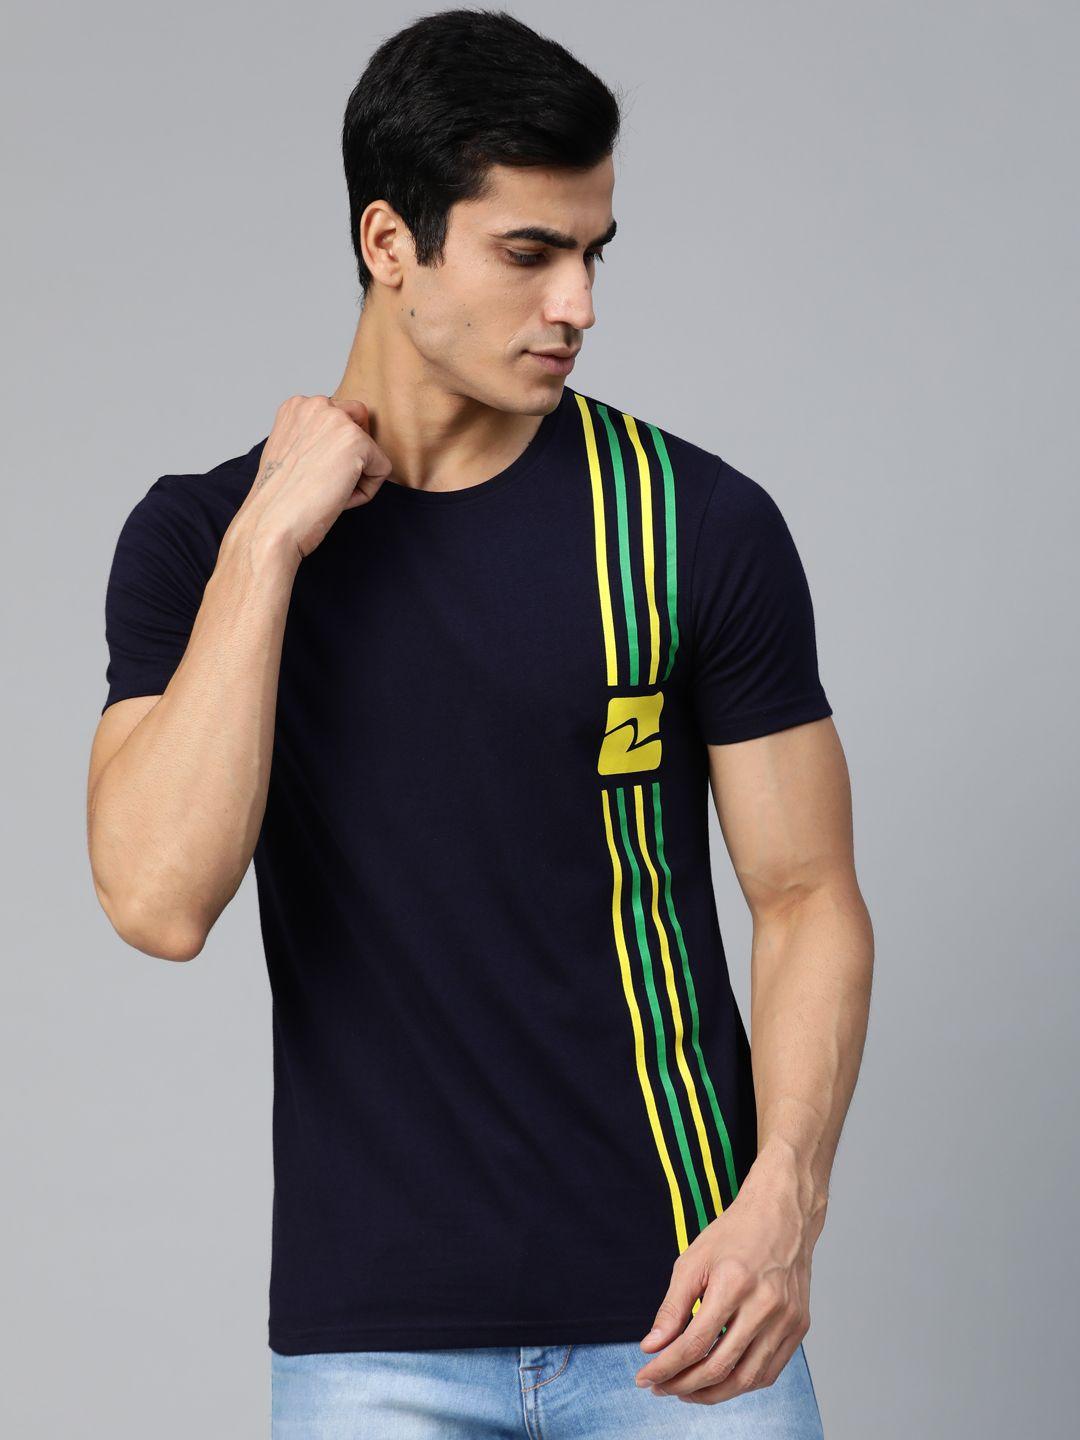 underjeans by spykar men navy blue & yellow striped detail round neck t-shirt